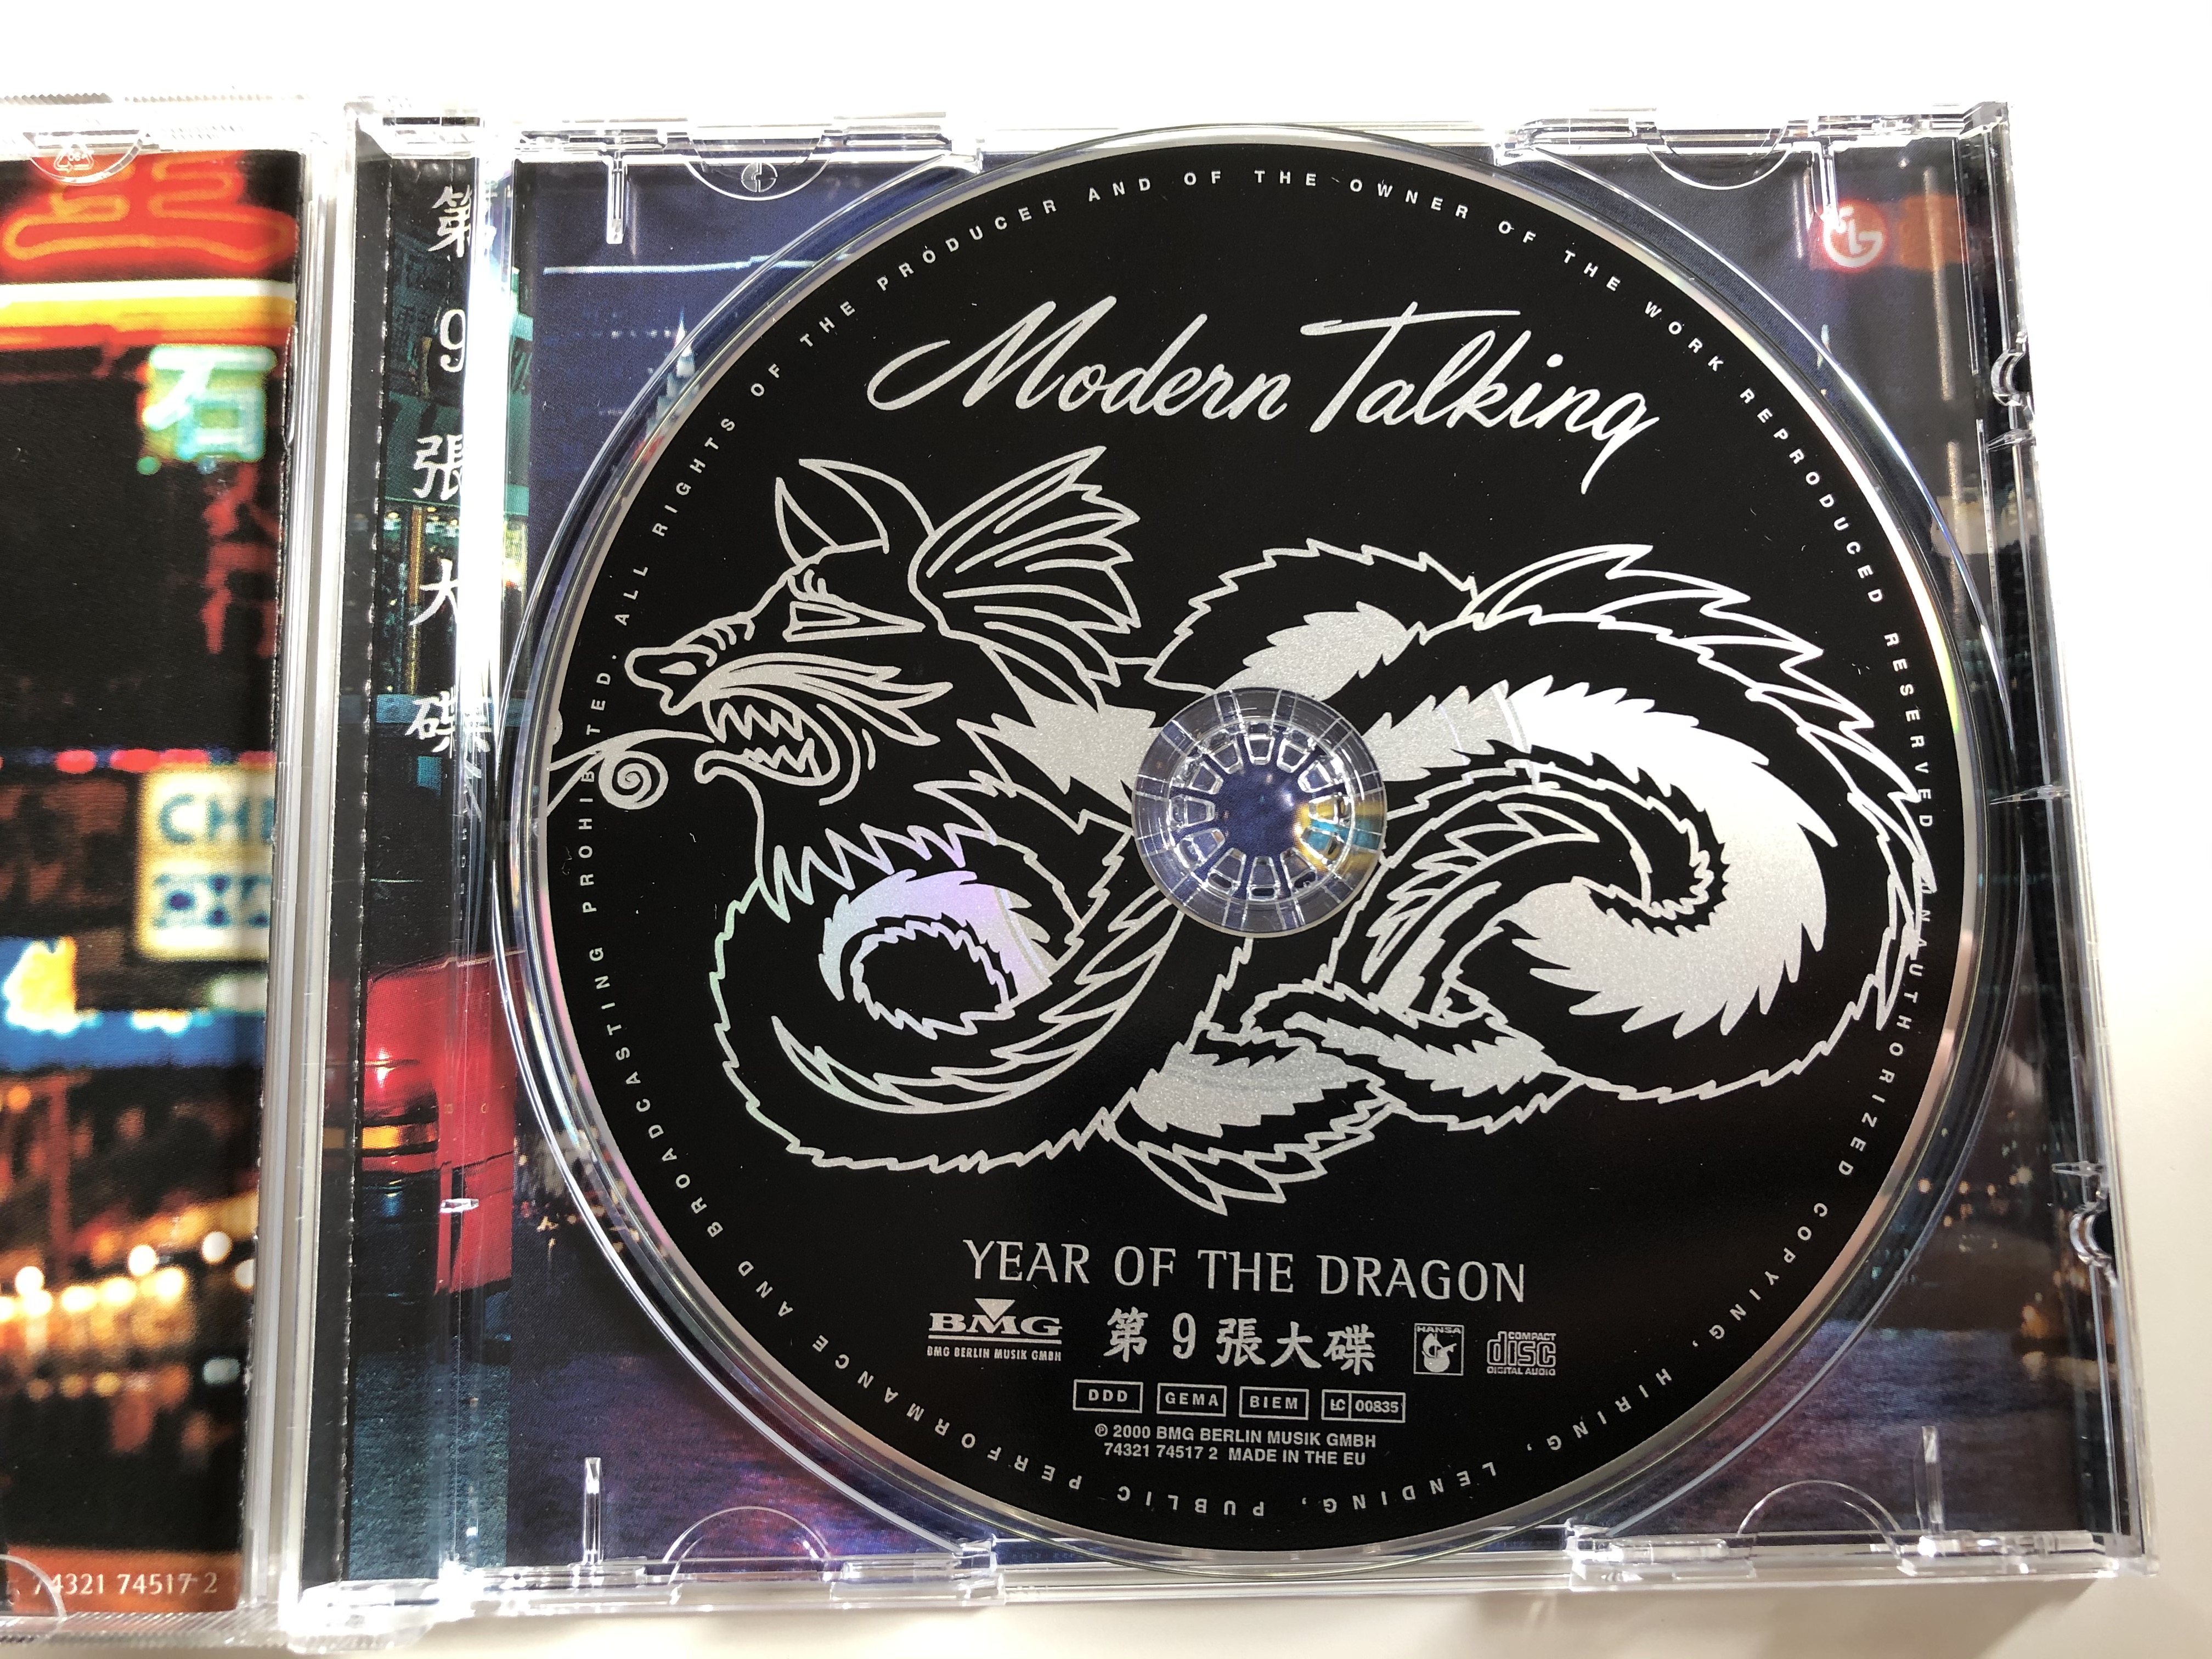 modern-talking-year-of-the-dragon-bmg-berlin-musik-gmbh-audio-cd-2000-74321-74517-2-8-.jpg